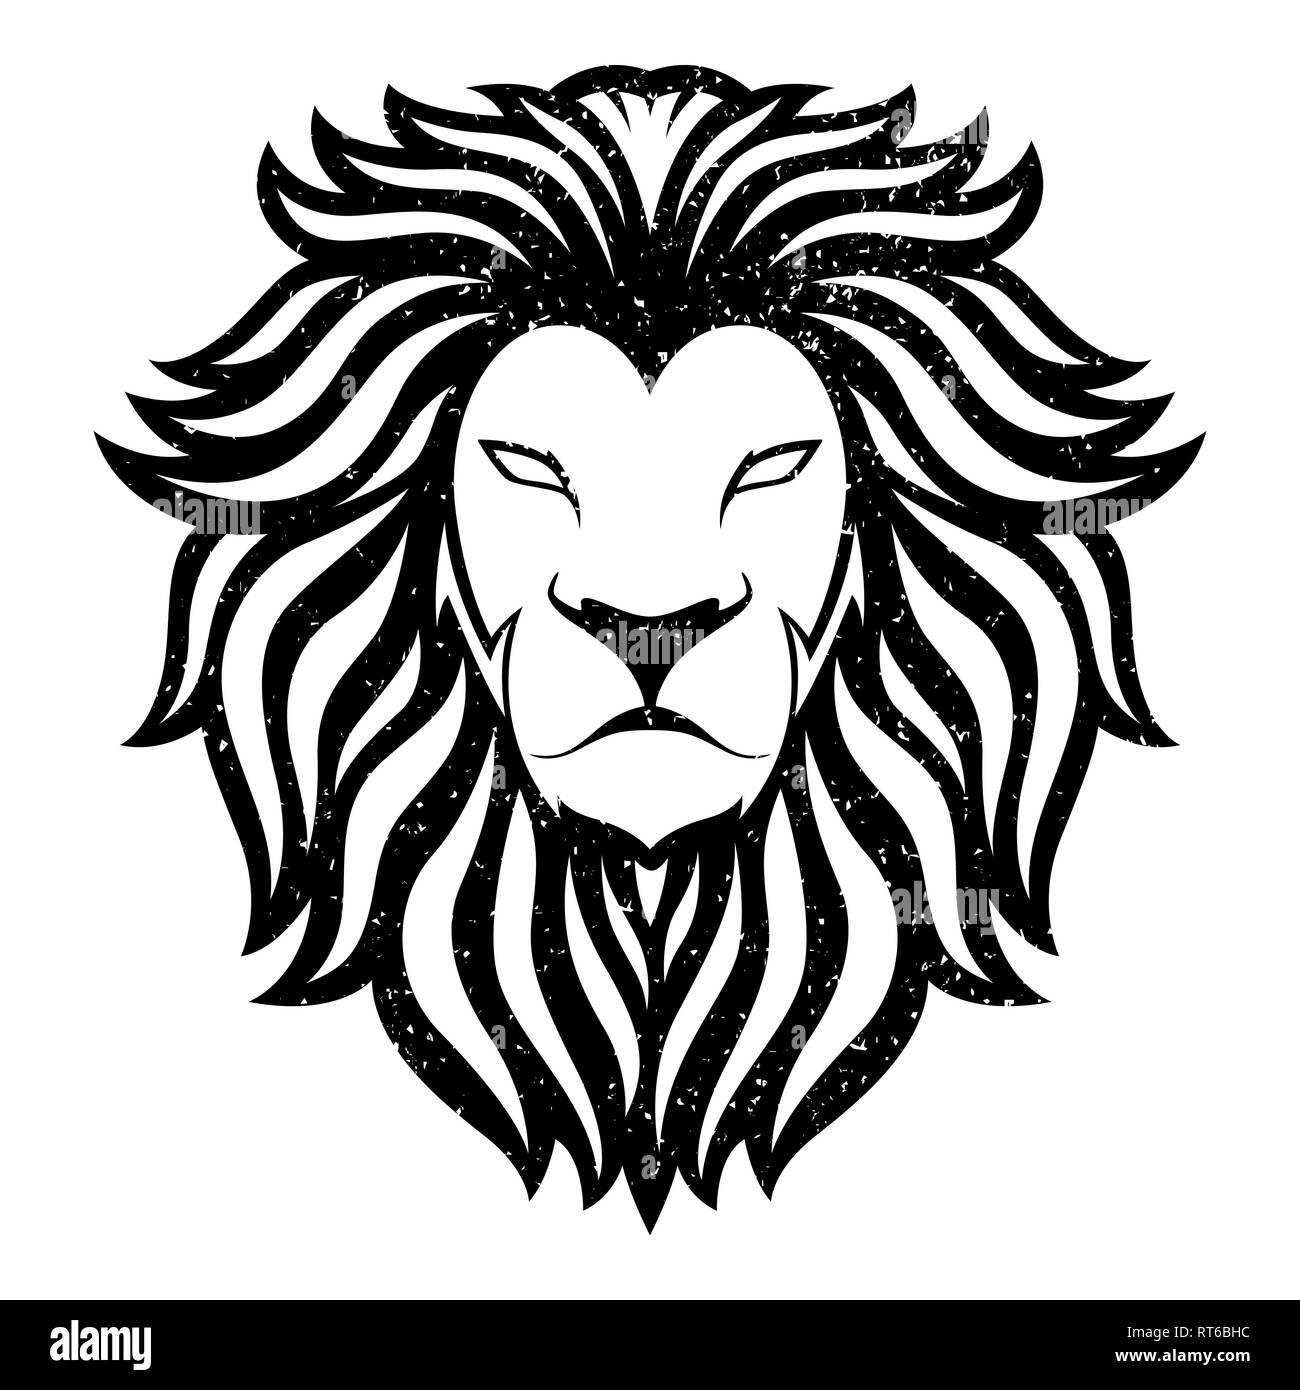 Lion head logo vector. Animal mascot. Vector illustration. Grunge distressed effect Stock Vector